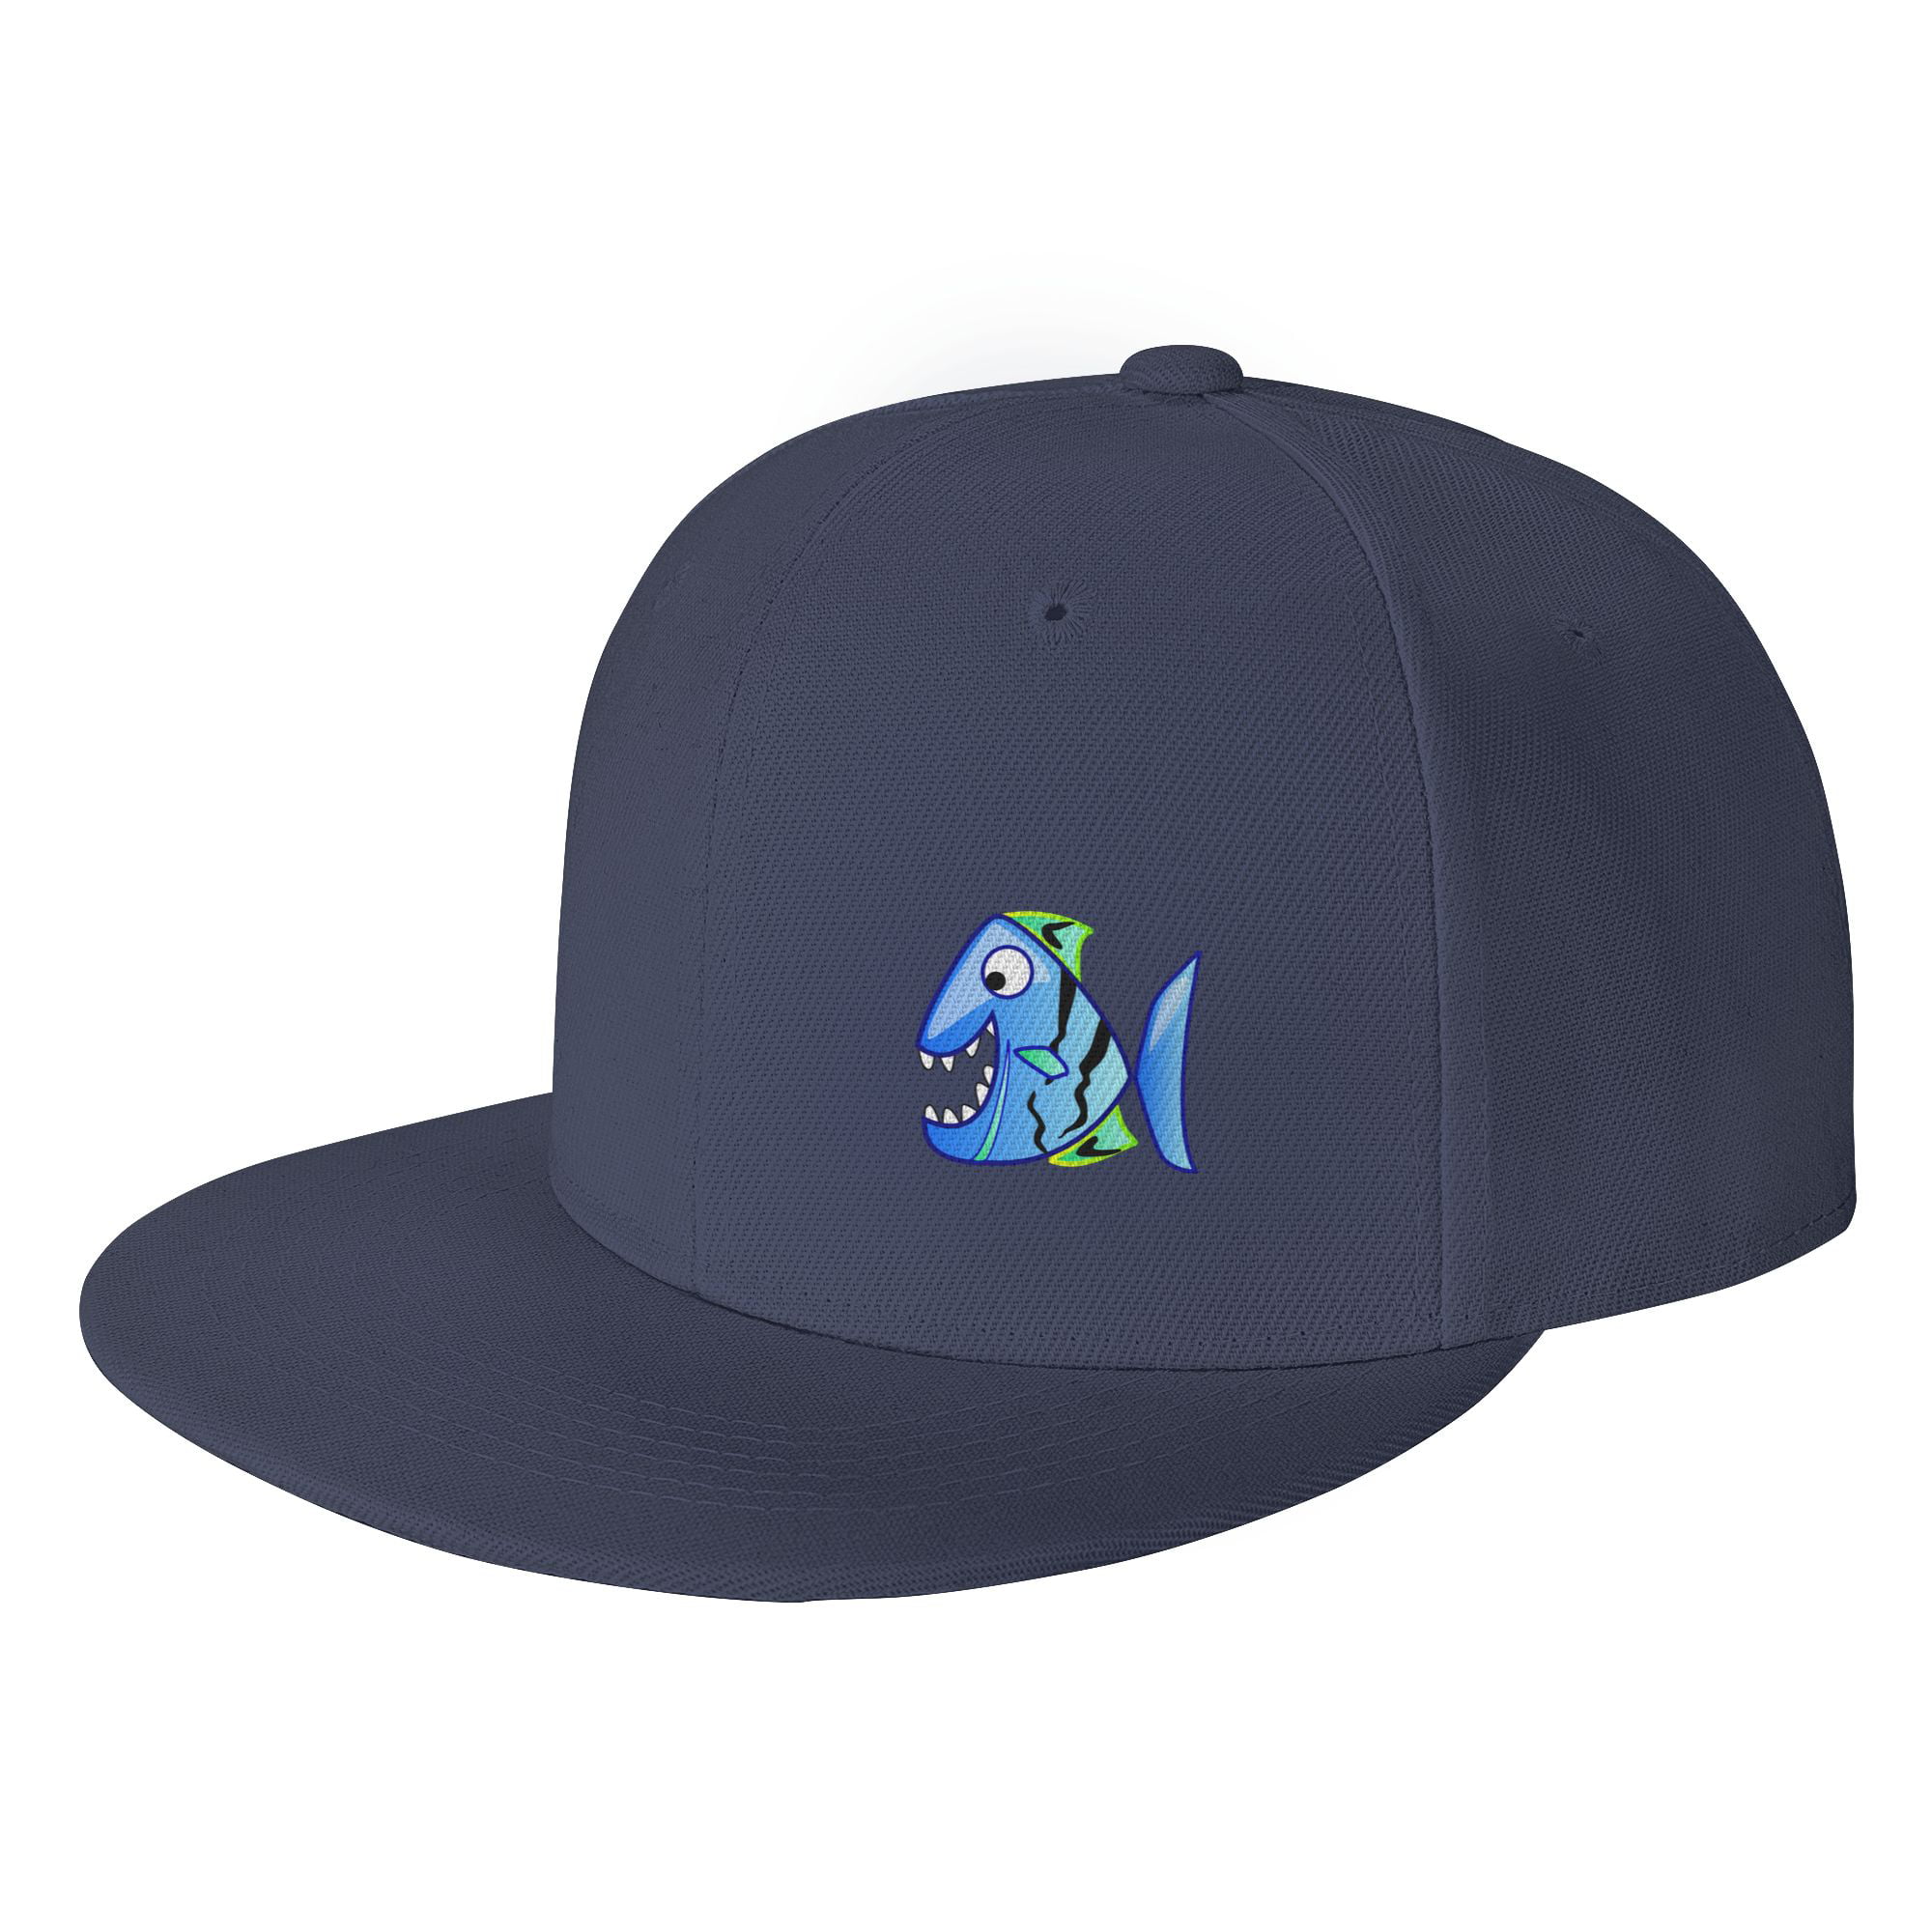 DouZhe Flat Brim Cap Snapback Hat, Blue Piranha Fish Prints